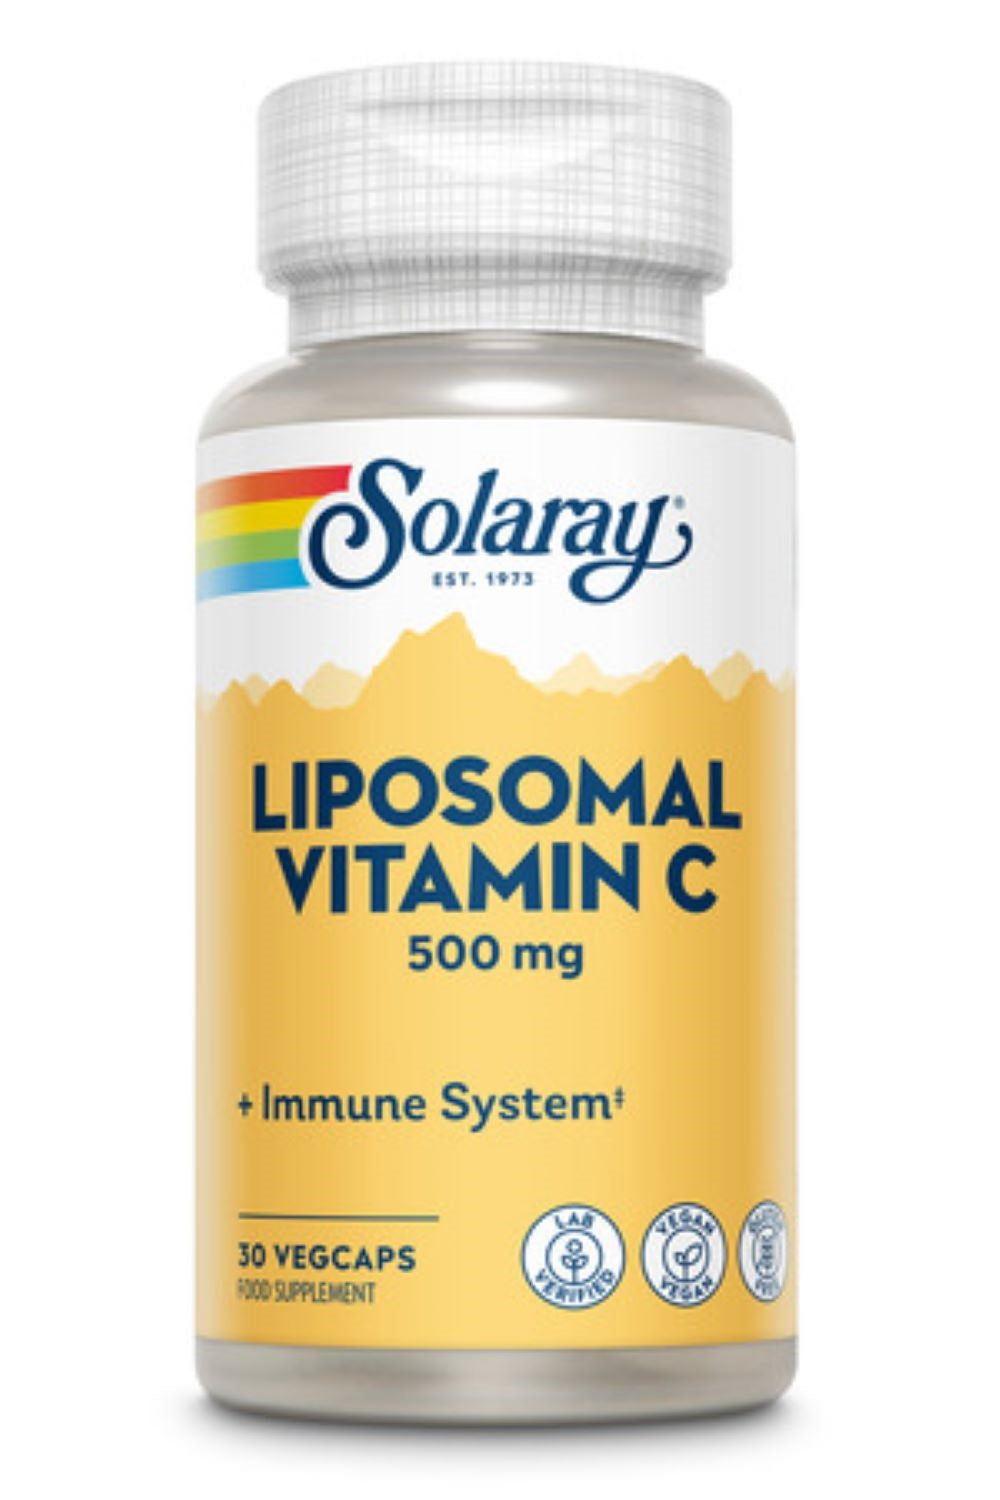 Solaray vitamina c liposomal - 500 mg, 30 cápsulas vegetales